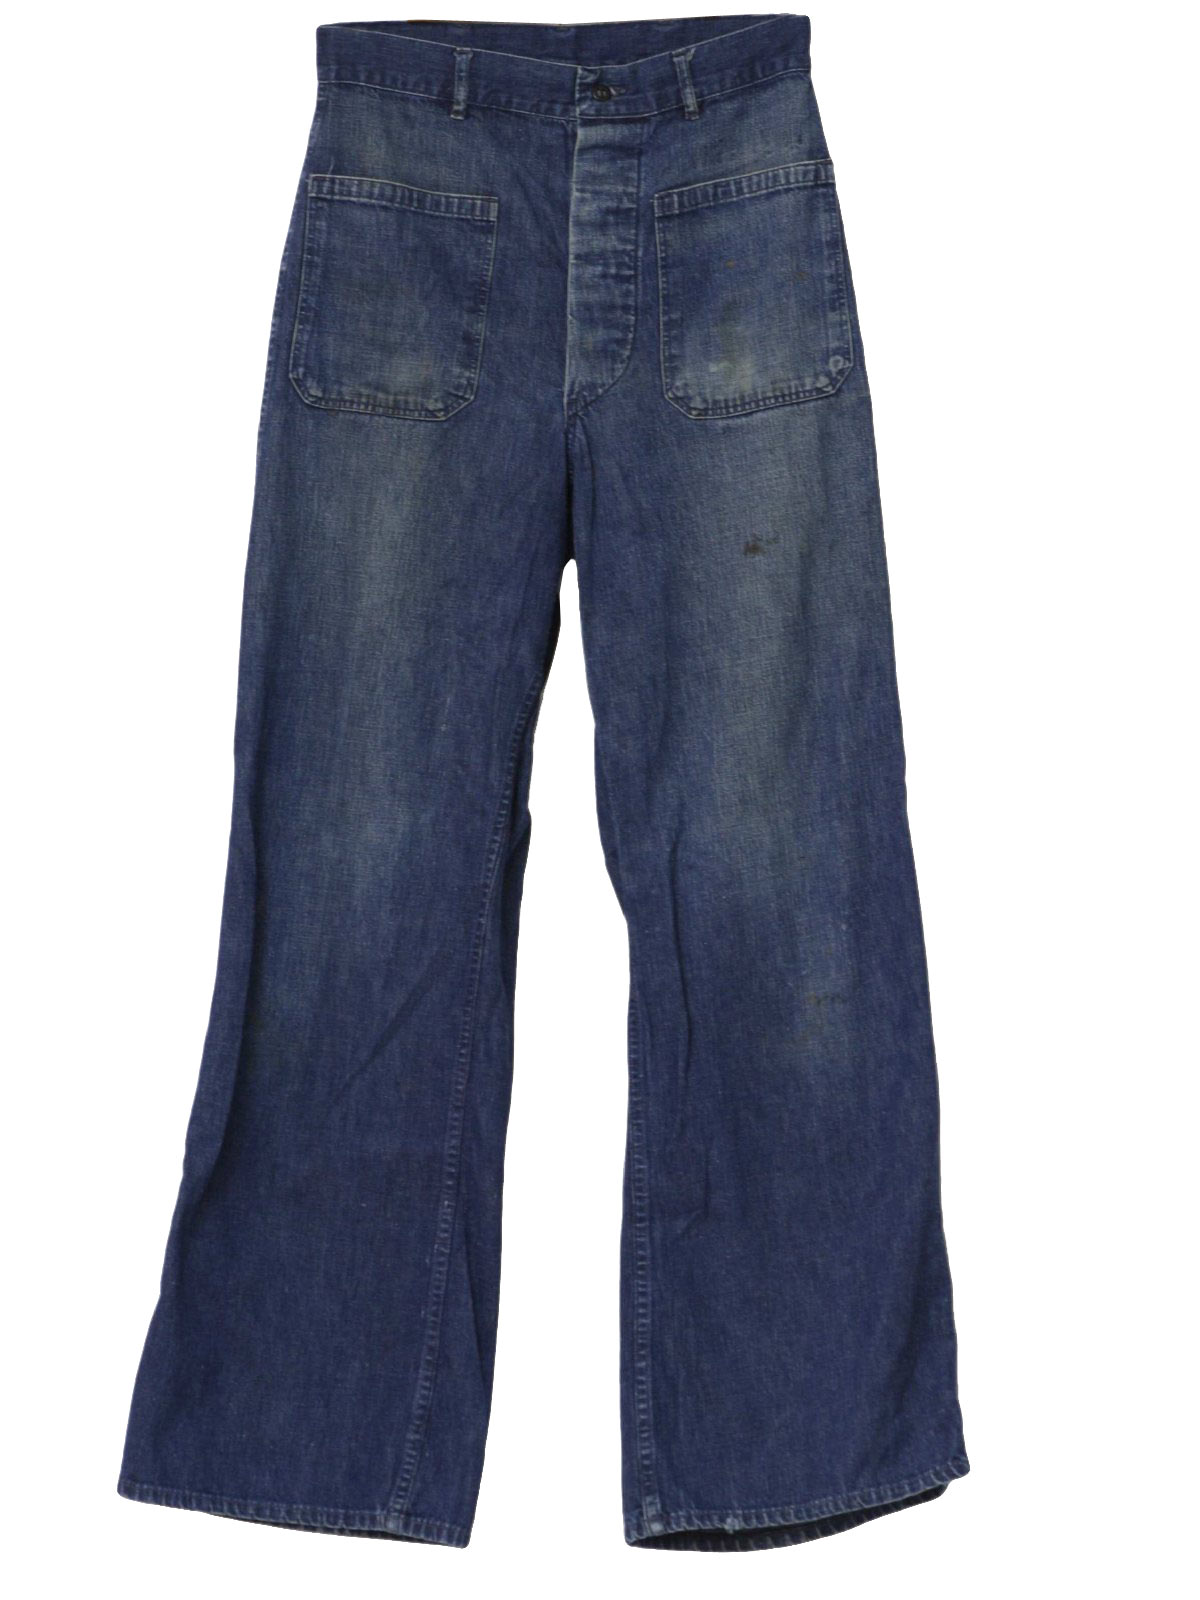 Retro 70s Bellbottom Pants: 70s -No Label- Mens blue cotton polyester ...